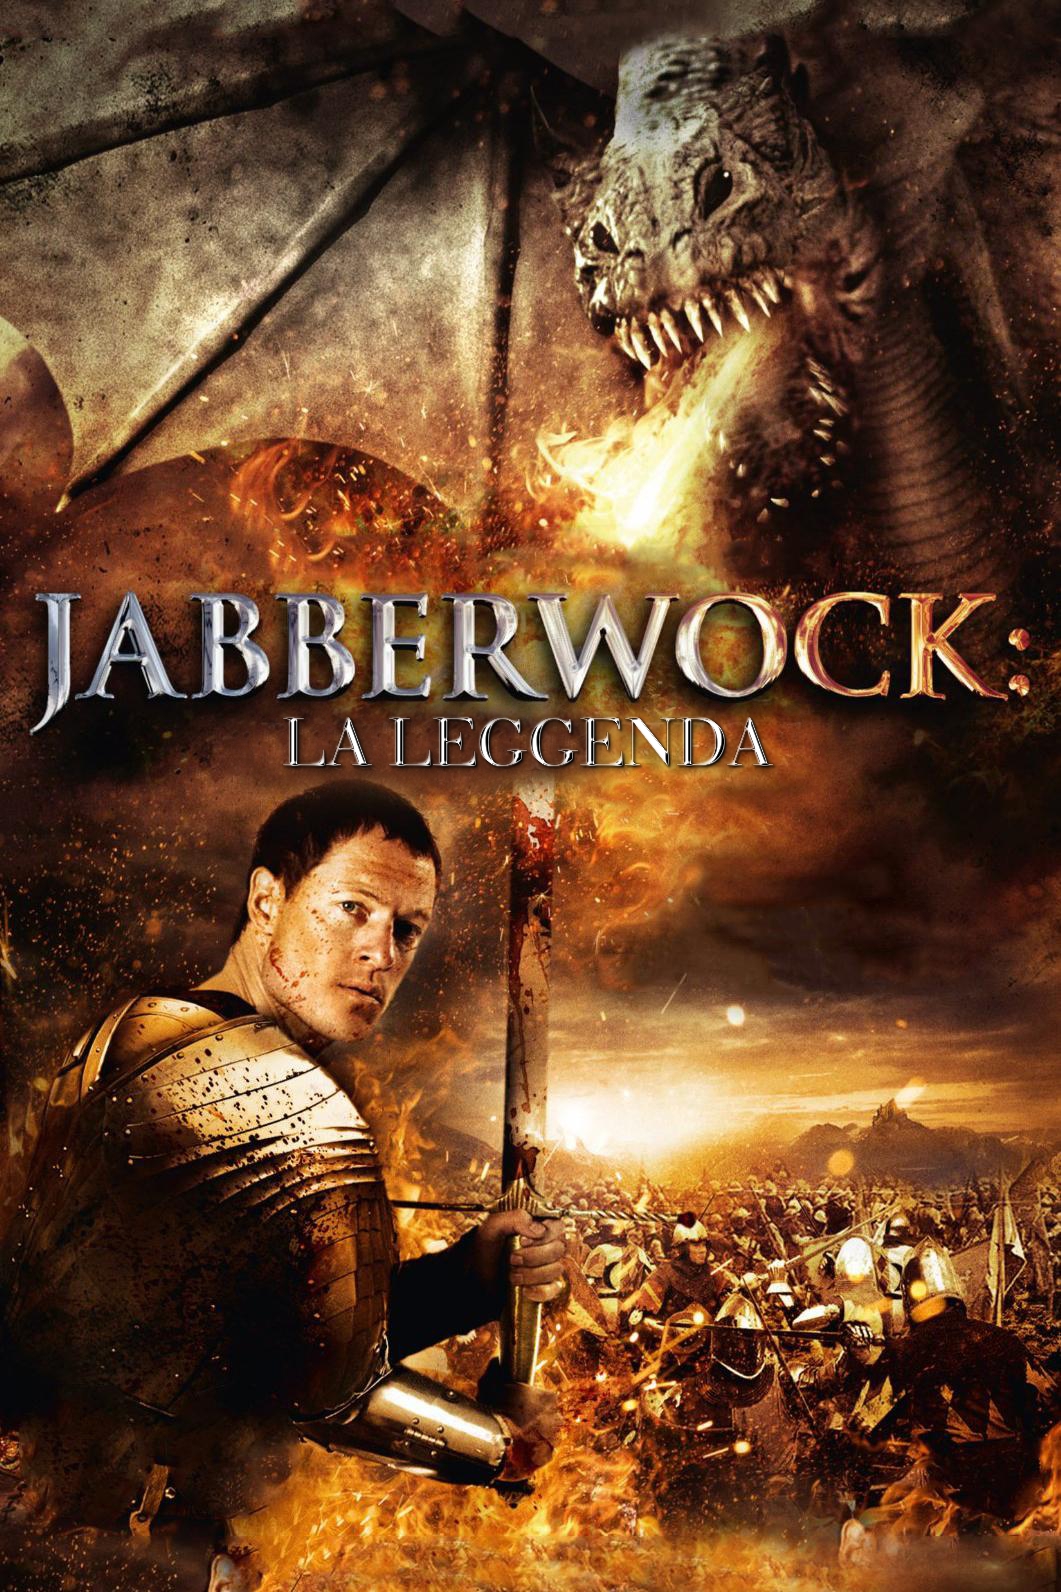 Jabberwock: La leggenda (2011)